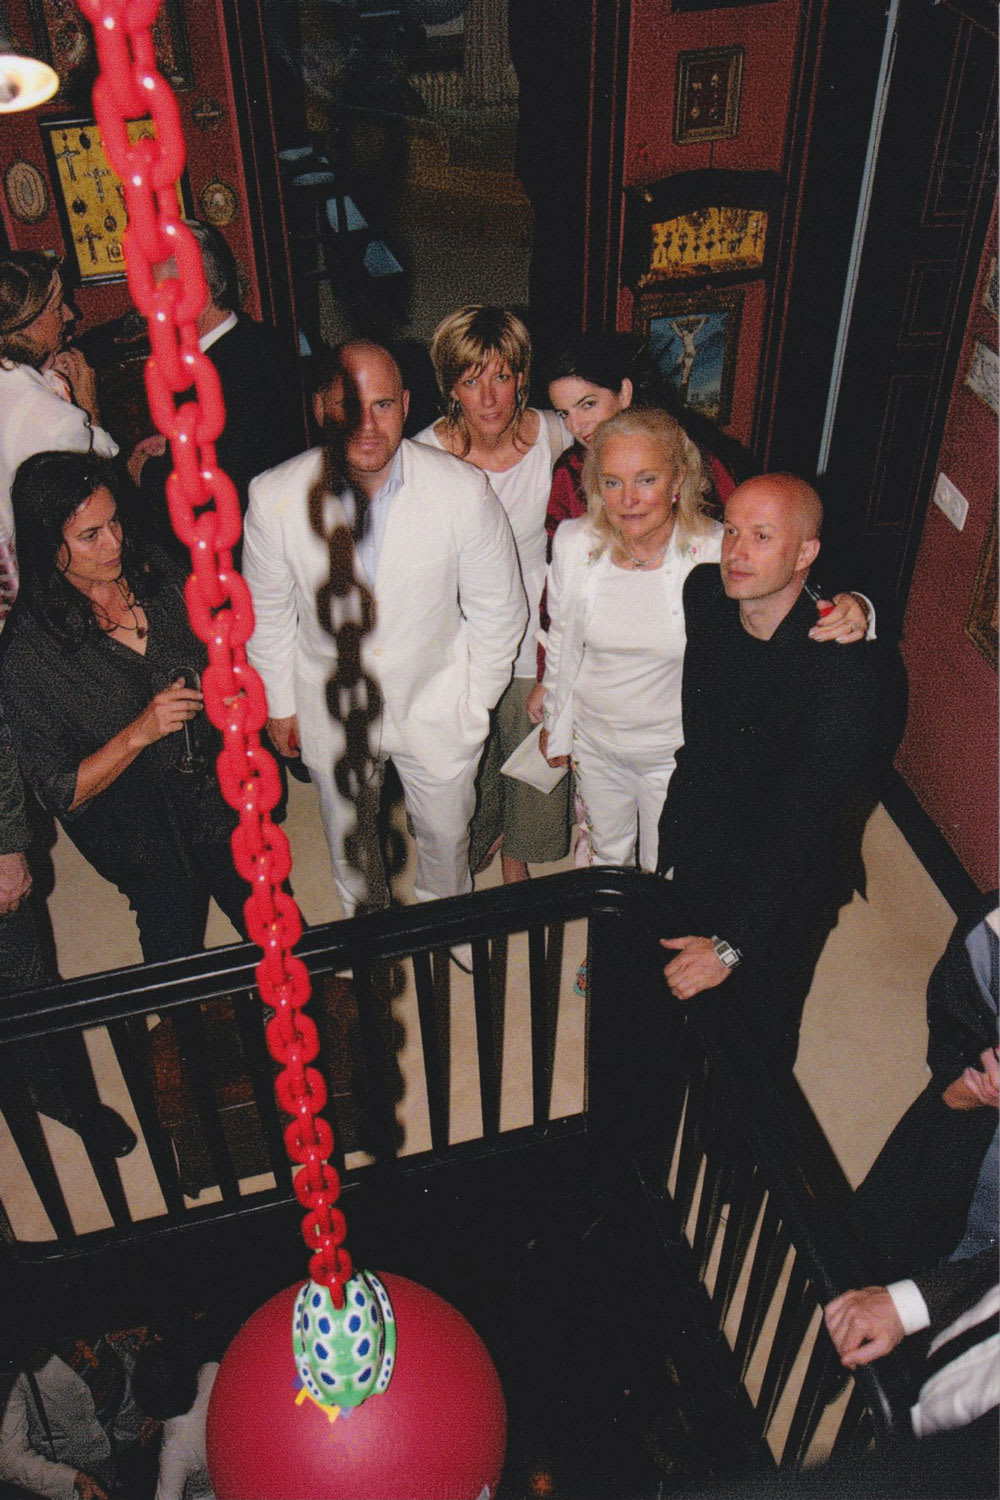 Inauguration of Jeff Koons’s Wrecking Ball at Ulla Dreyfus-Best’s home in Basel, 2007. From left: Maja Hoffmann, Marc Spiegler, Annette Schönholzer, Cay Sophie Rabinowitz, Ulla Dreyfus-Best, and Sam Keller.